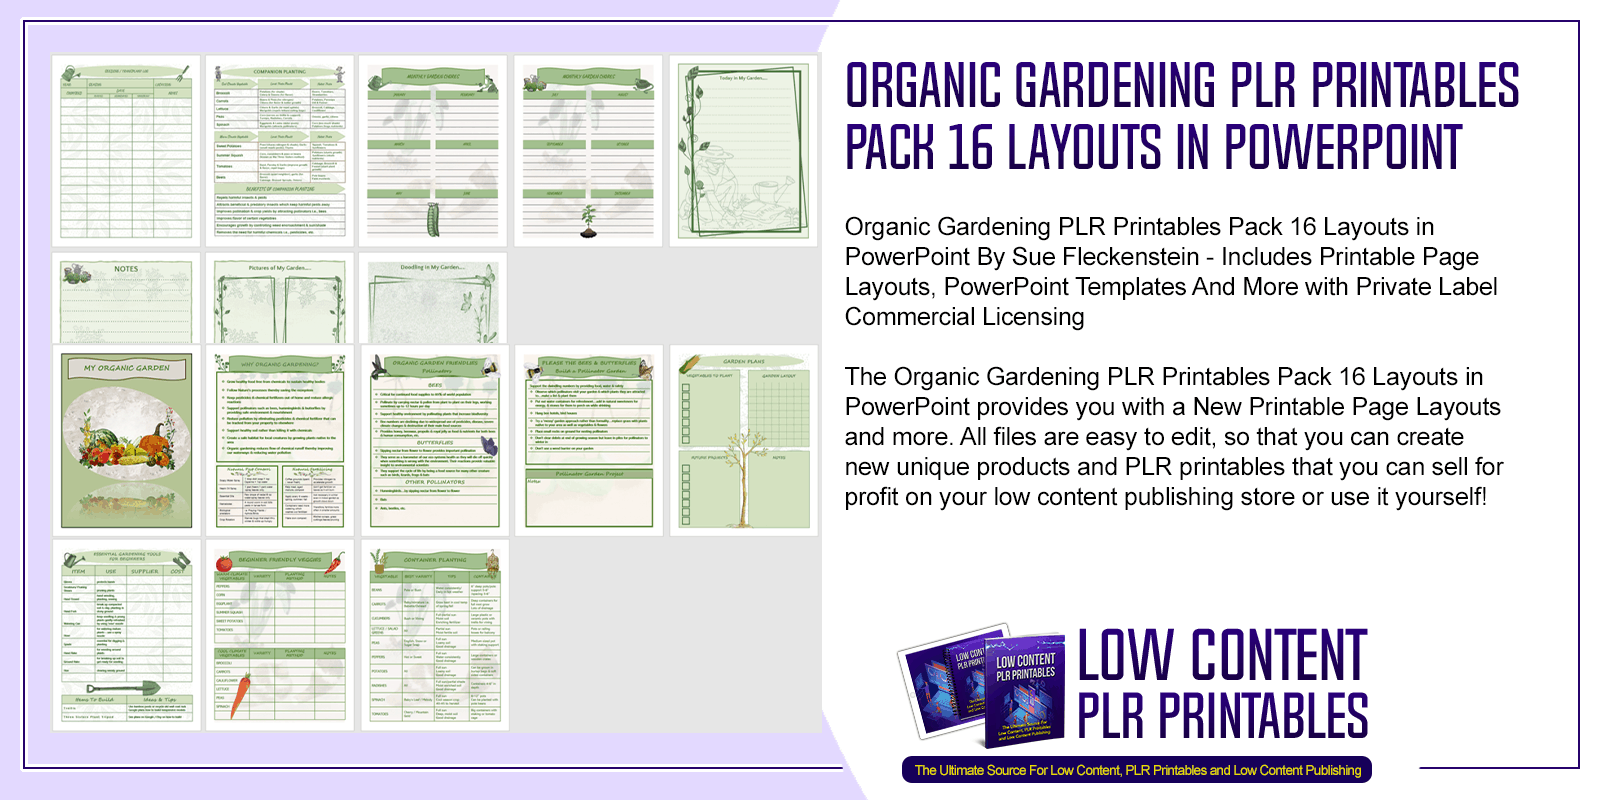 Organic Gardening PLR Printables Pack 16 Layouts in PowerPoint